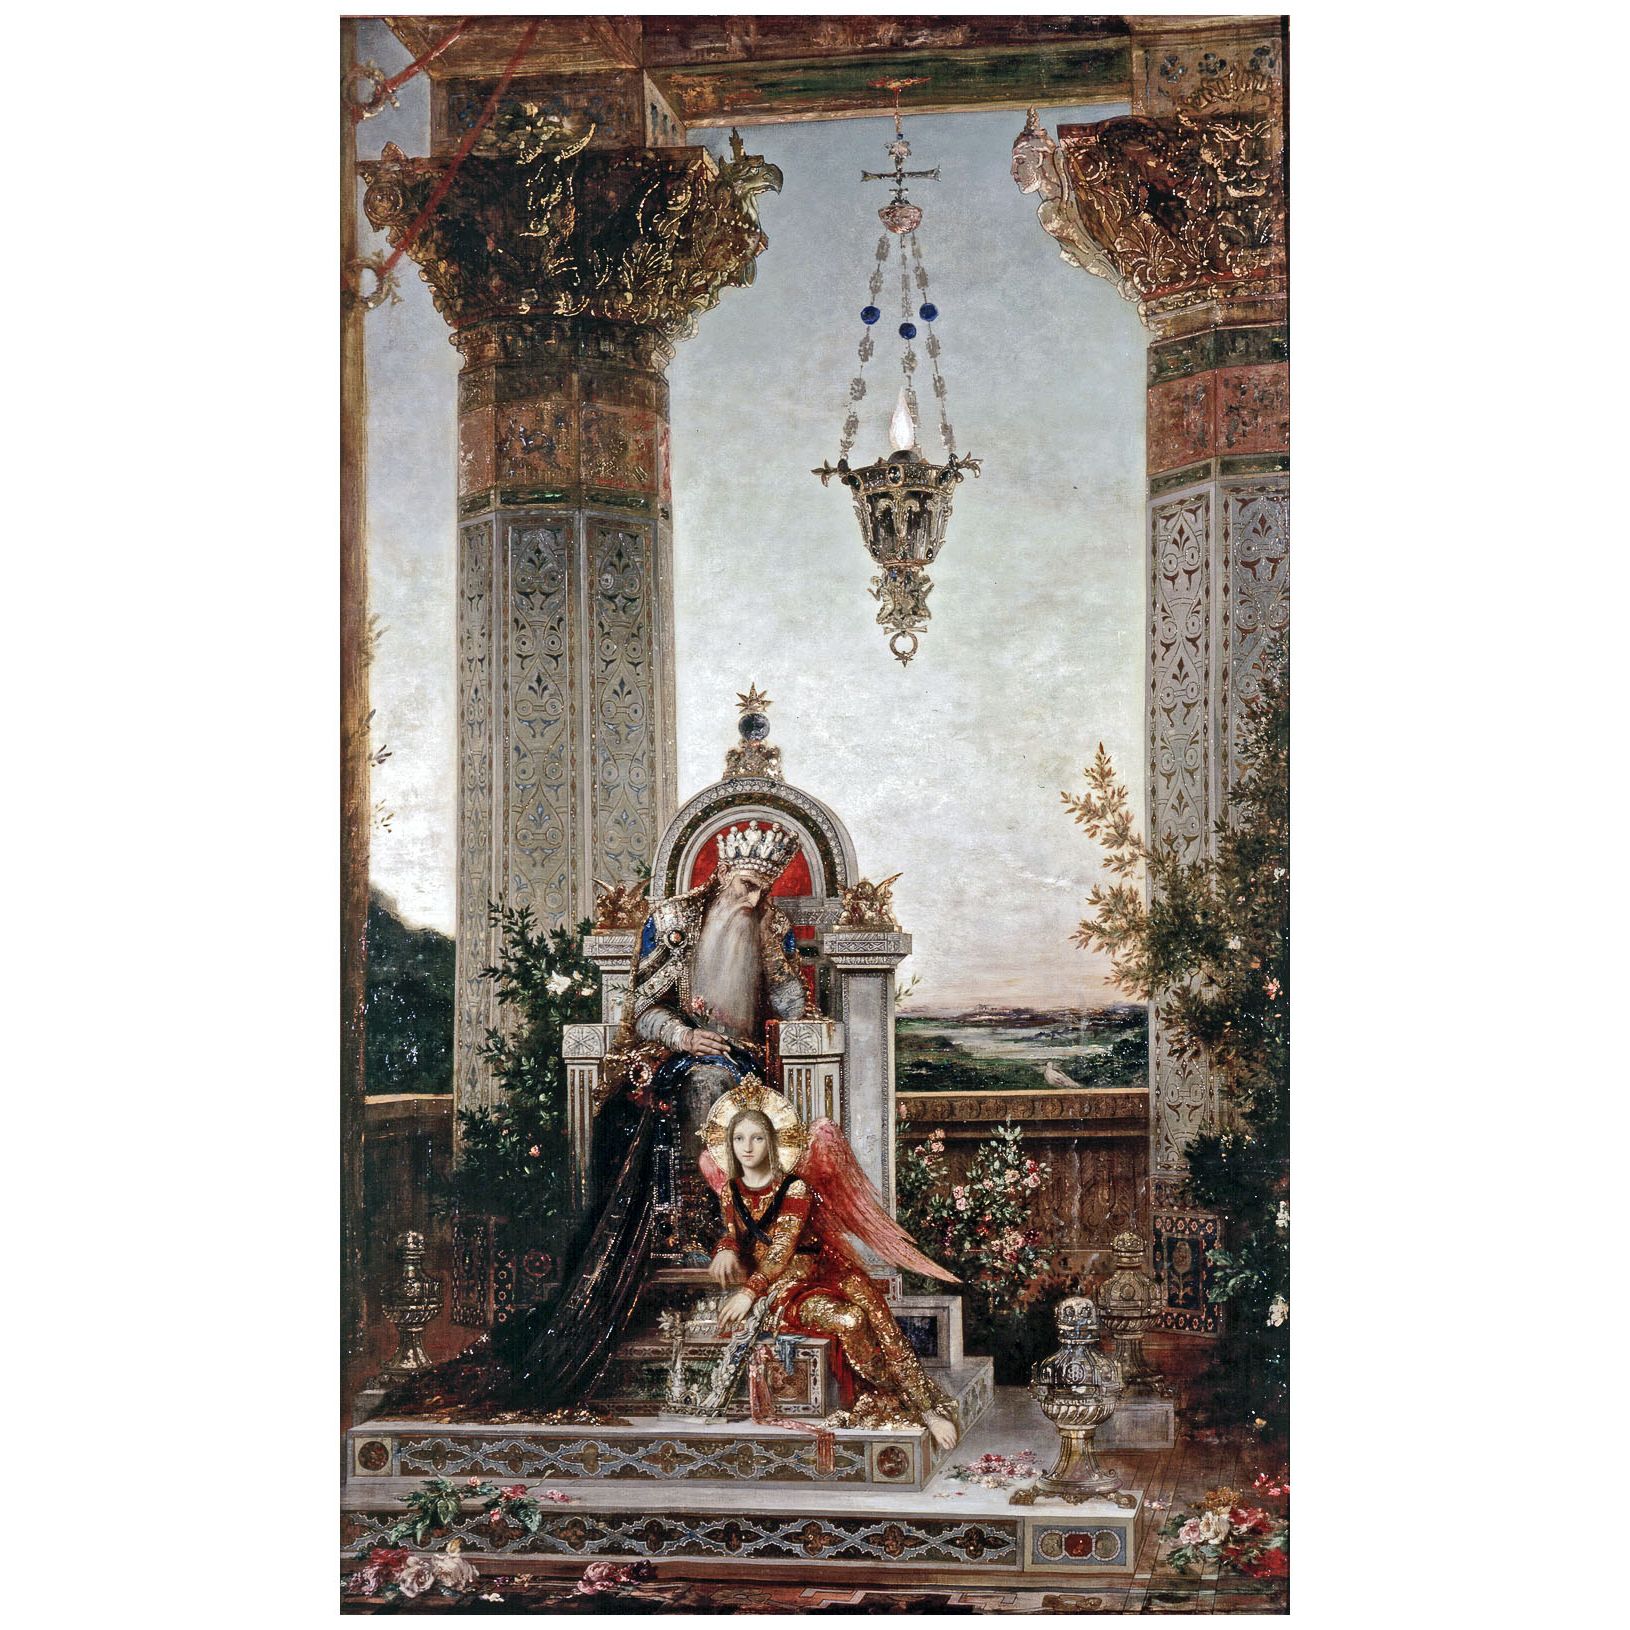 Gustave Moreau. David. 1874. Hammer Museum Los Angeles